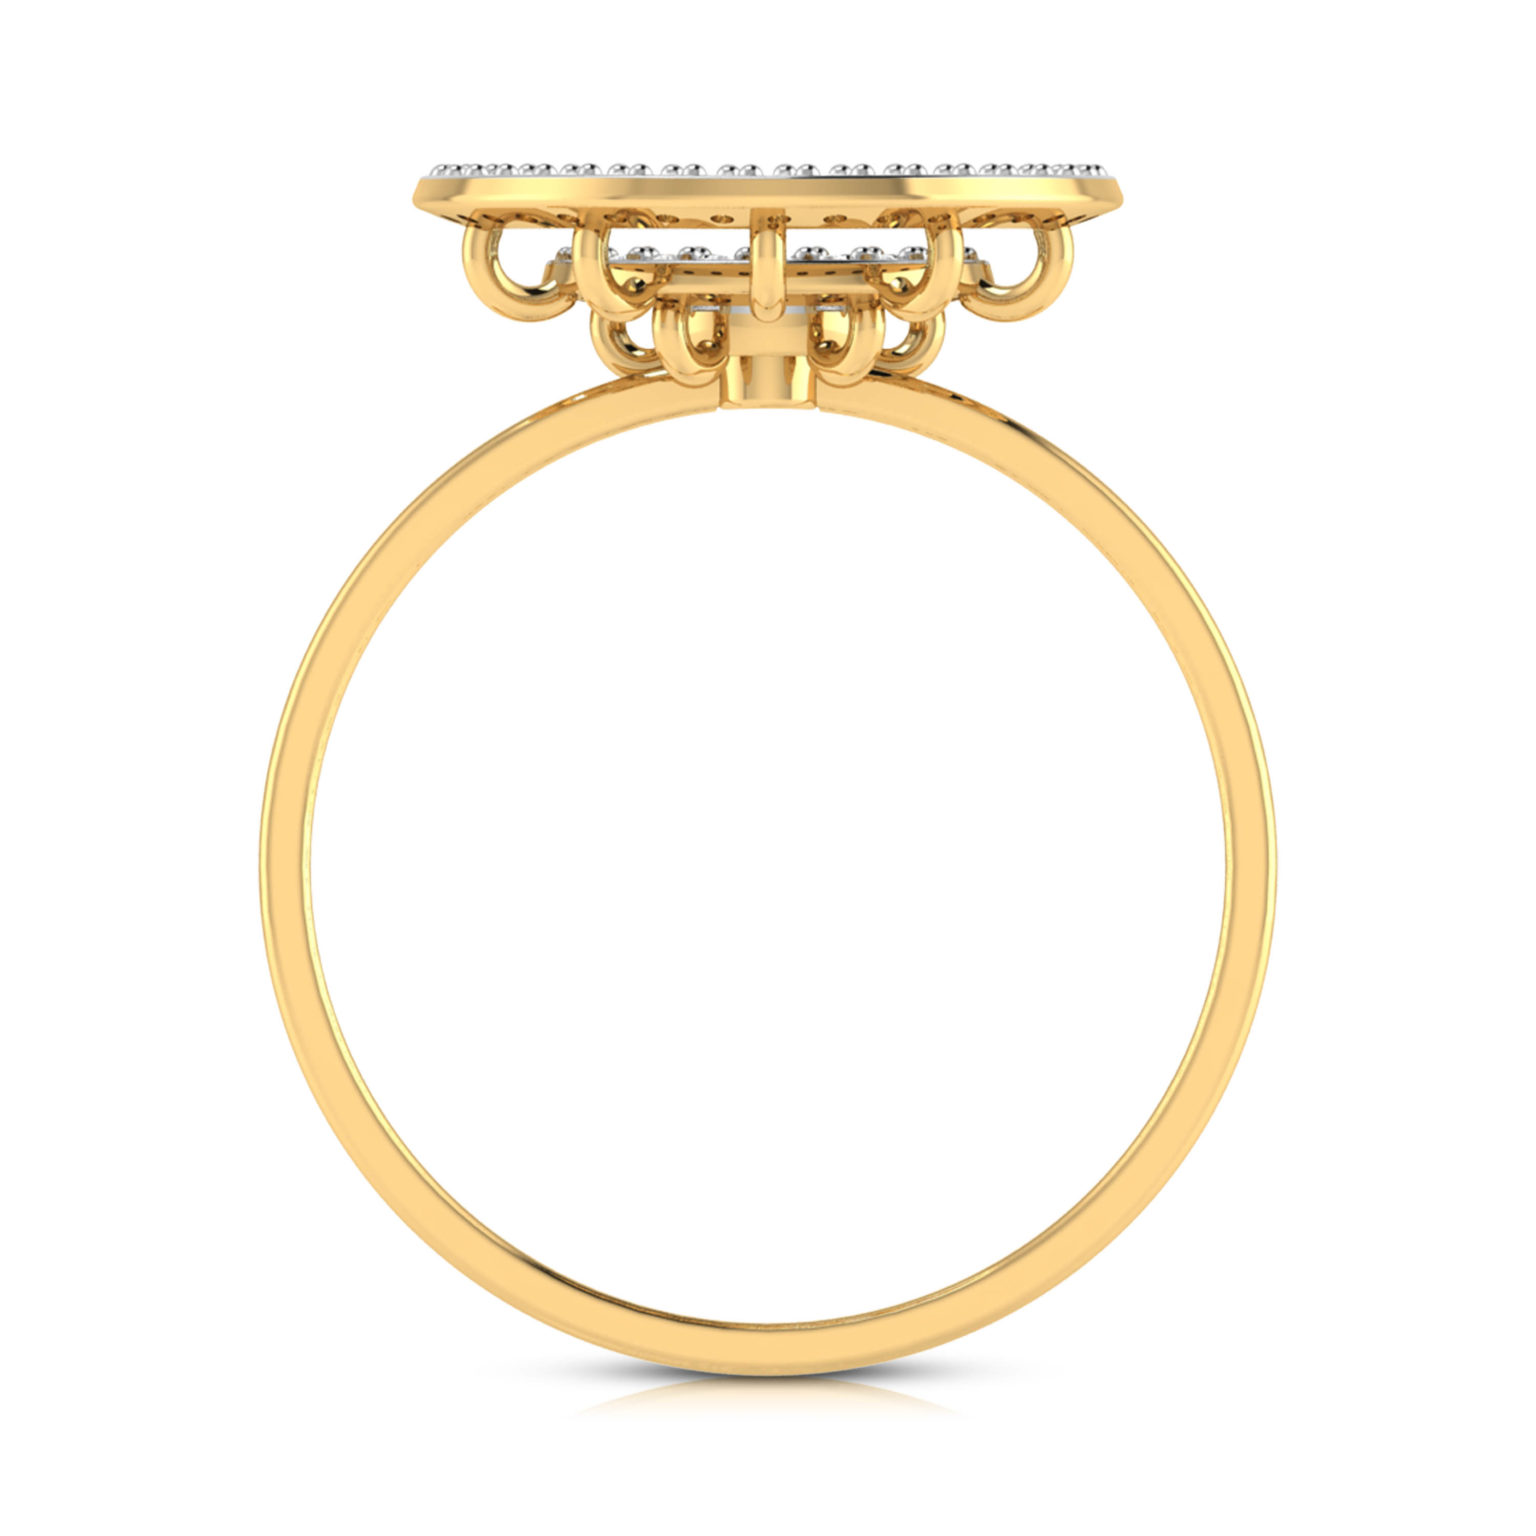 Orbicular ring Collection – 18 KT – RMDG ADR – 1892